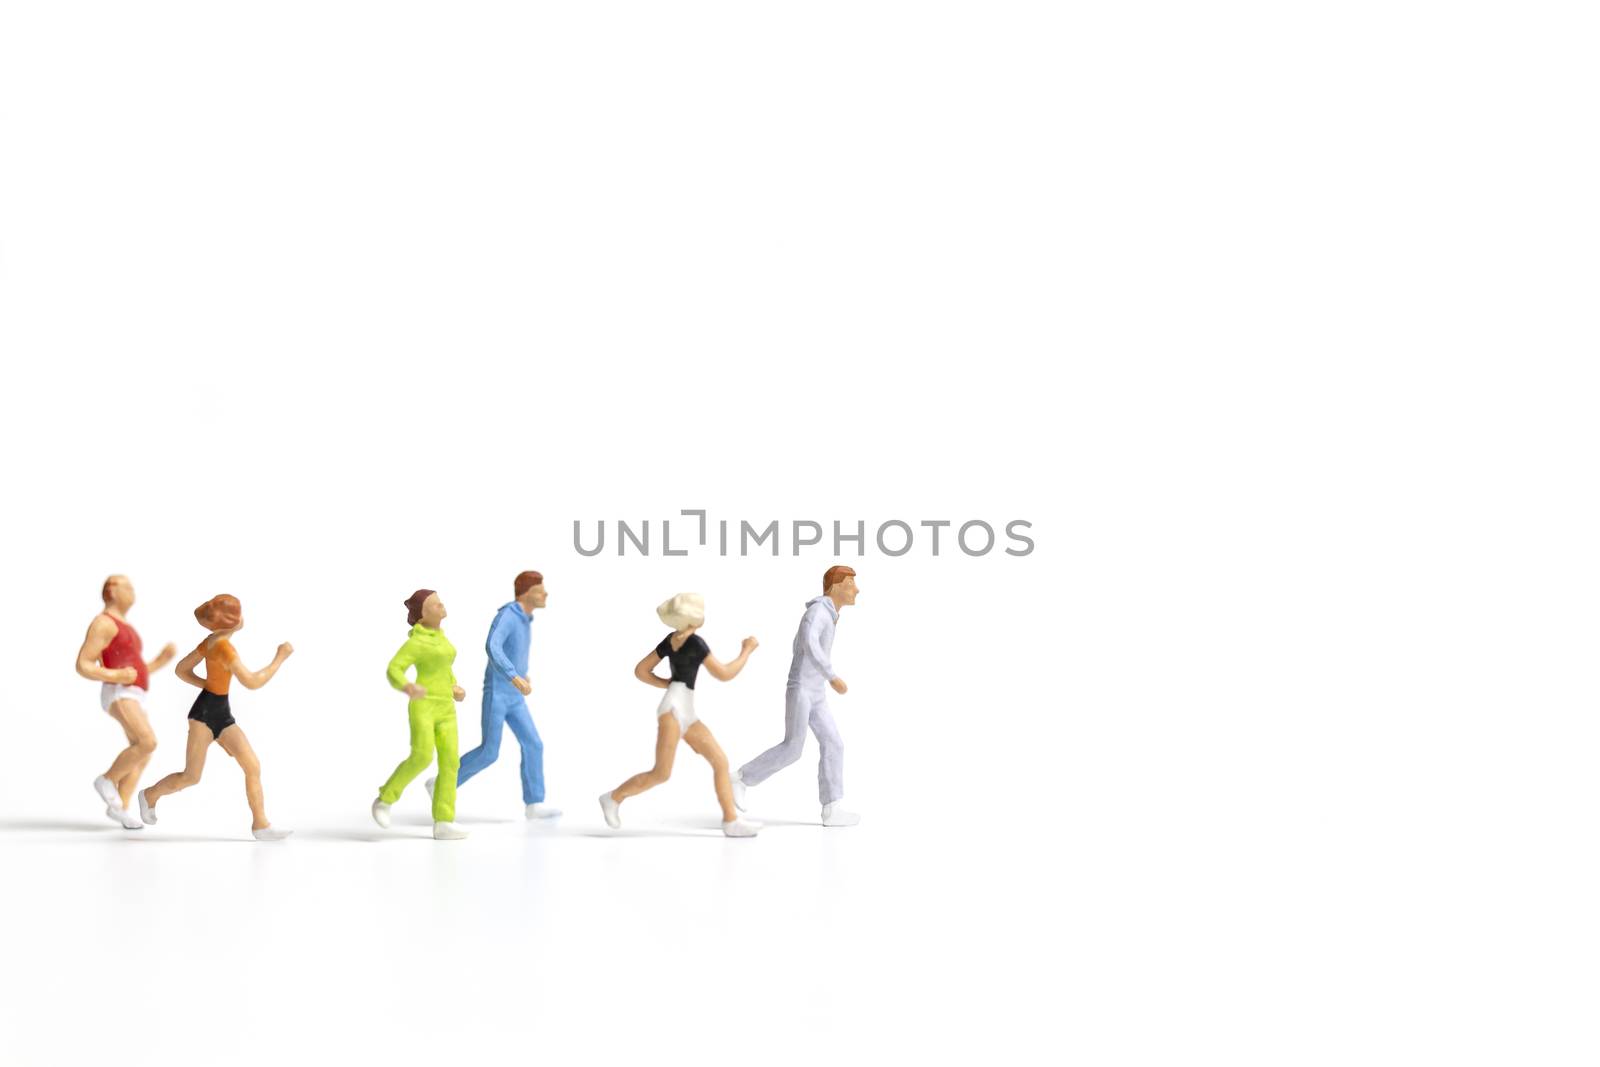 Miniature people running on white background by sirichaiyaymicro